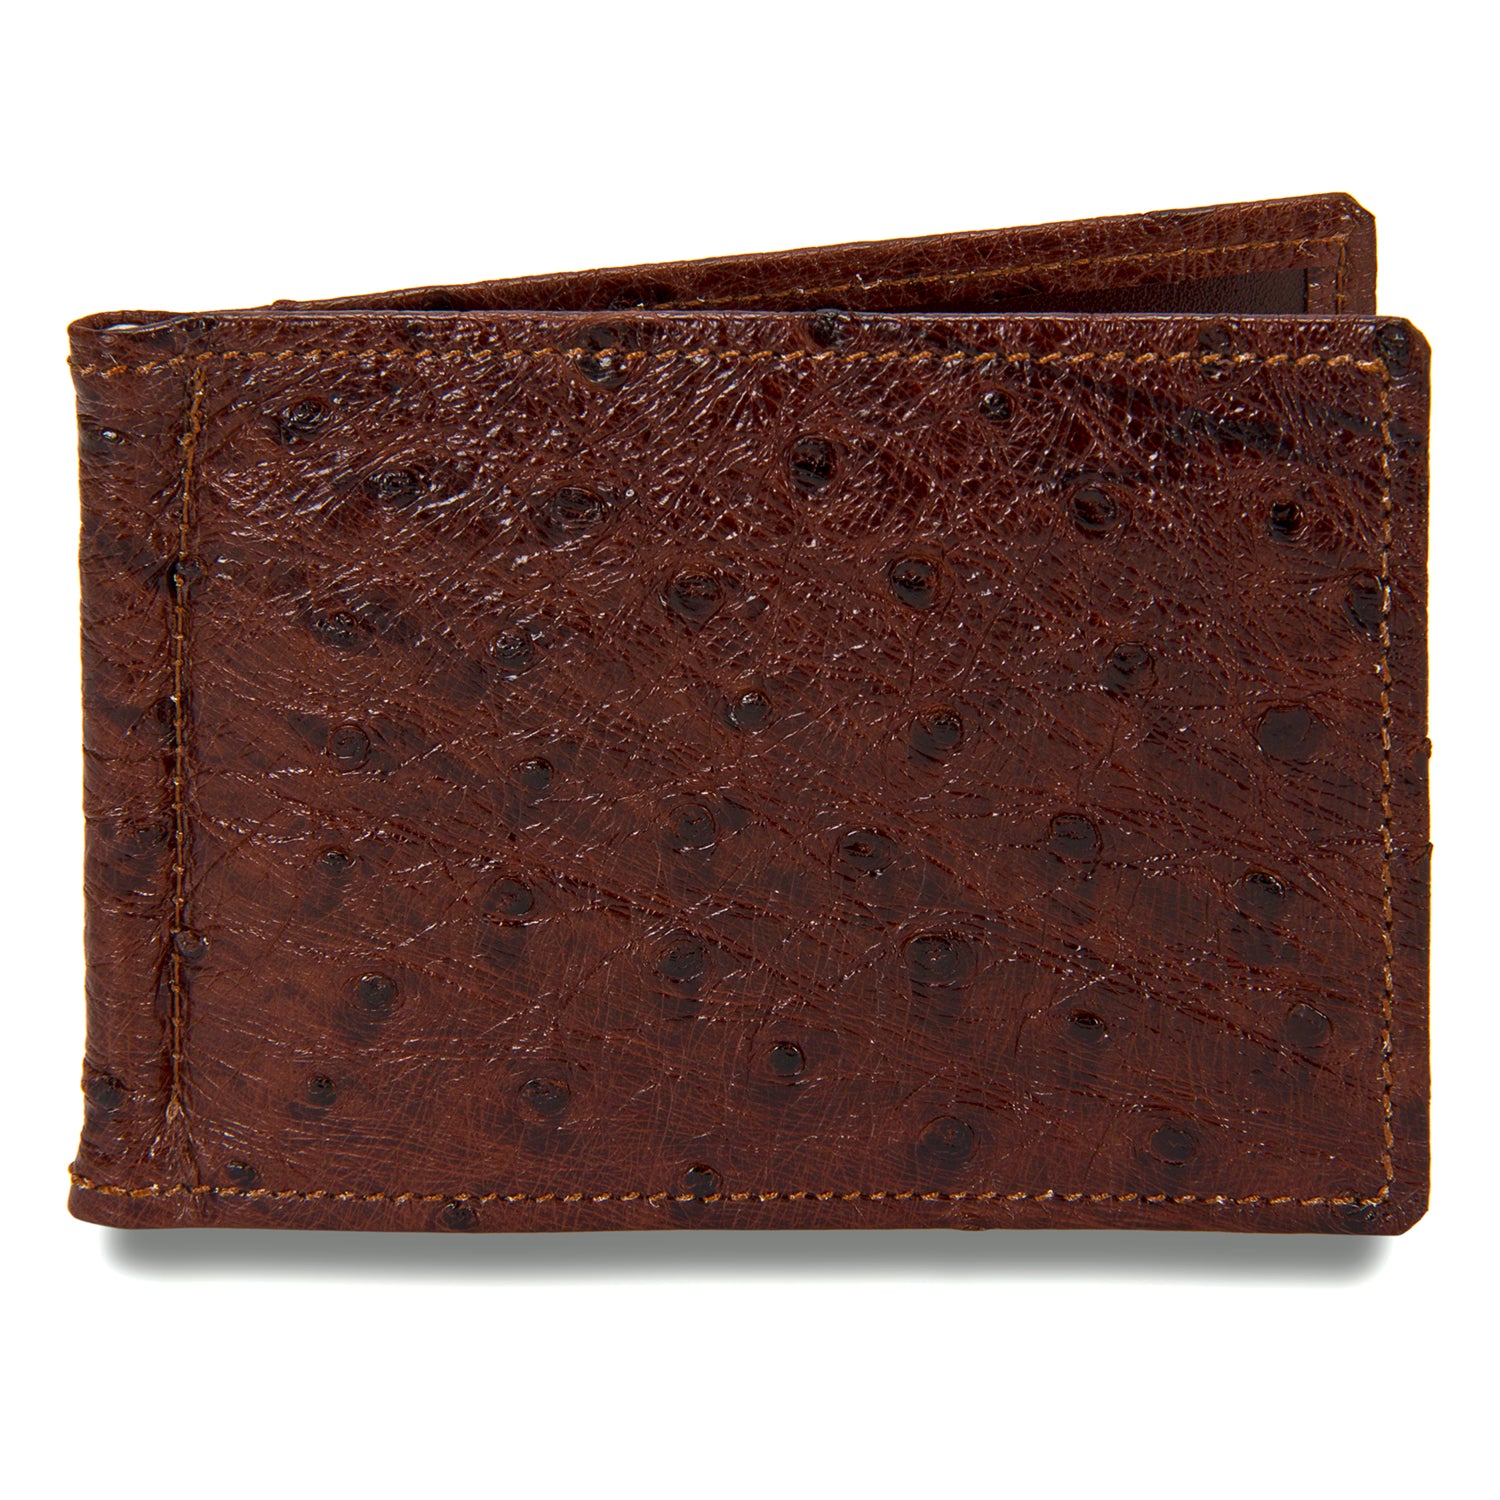 Ostrich Skin Wallet Mens Leather Wallet